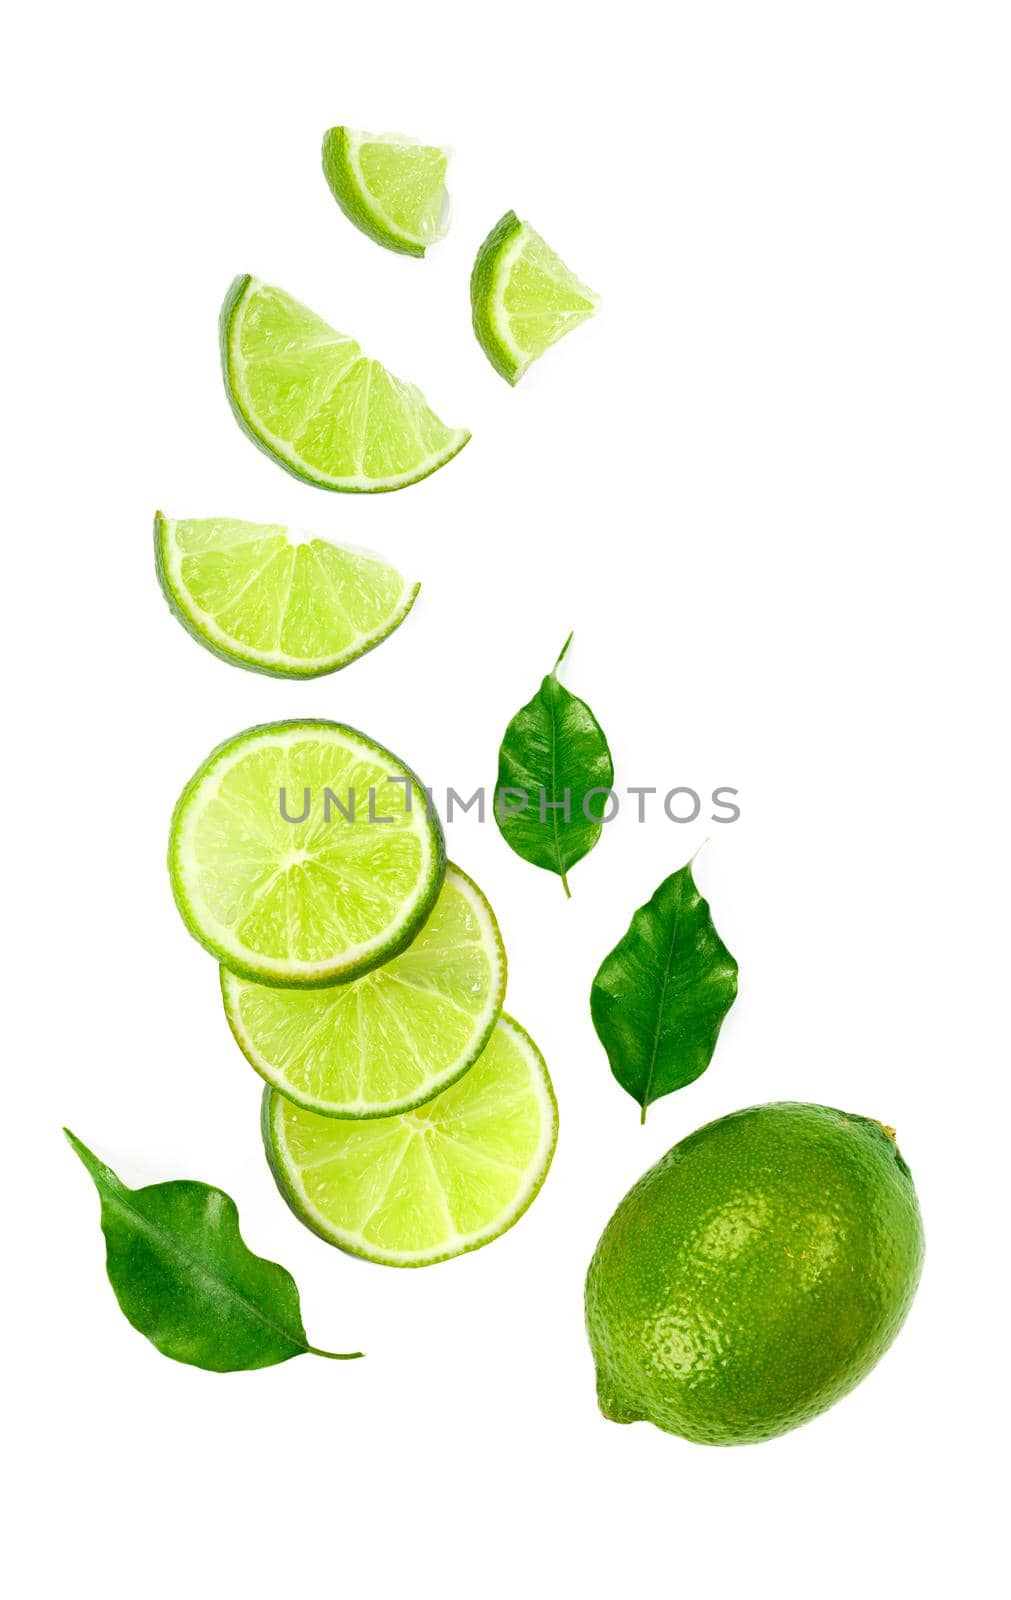 Chopped lime fruit isolated on white background. High quality photo